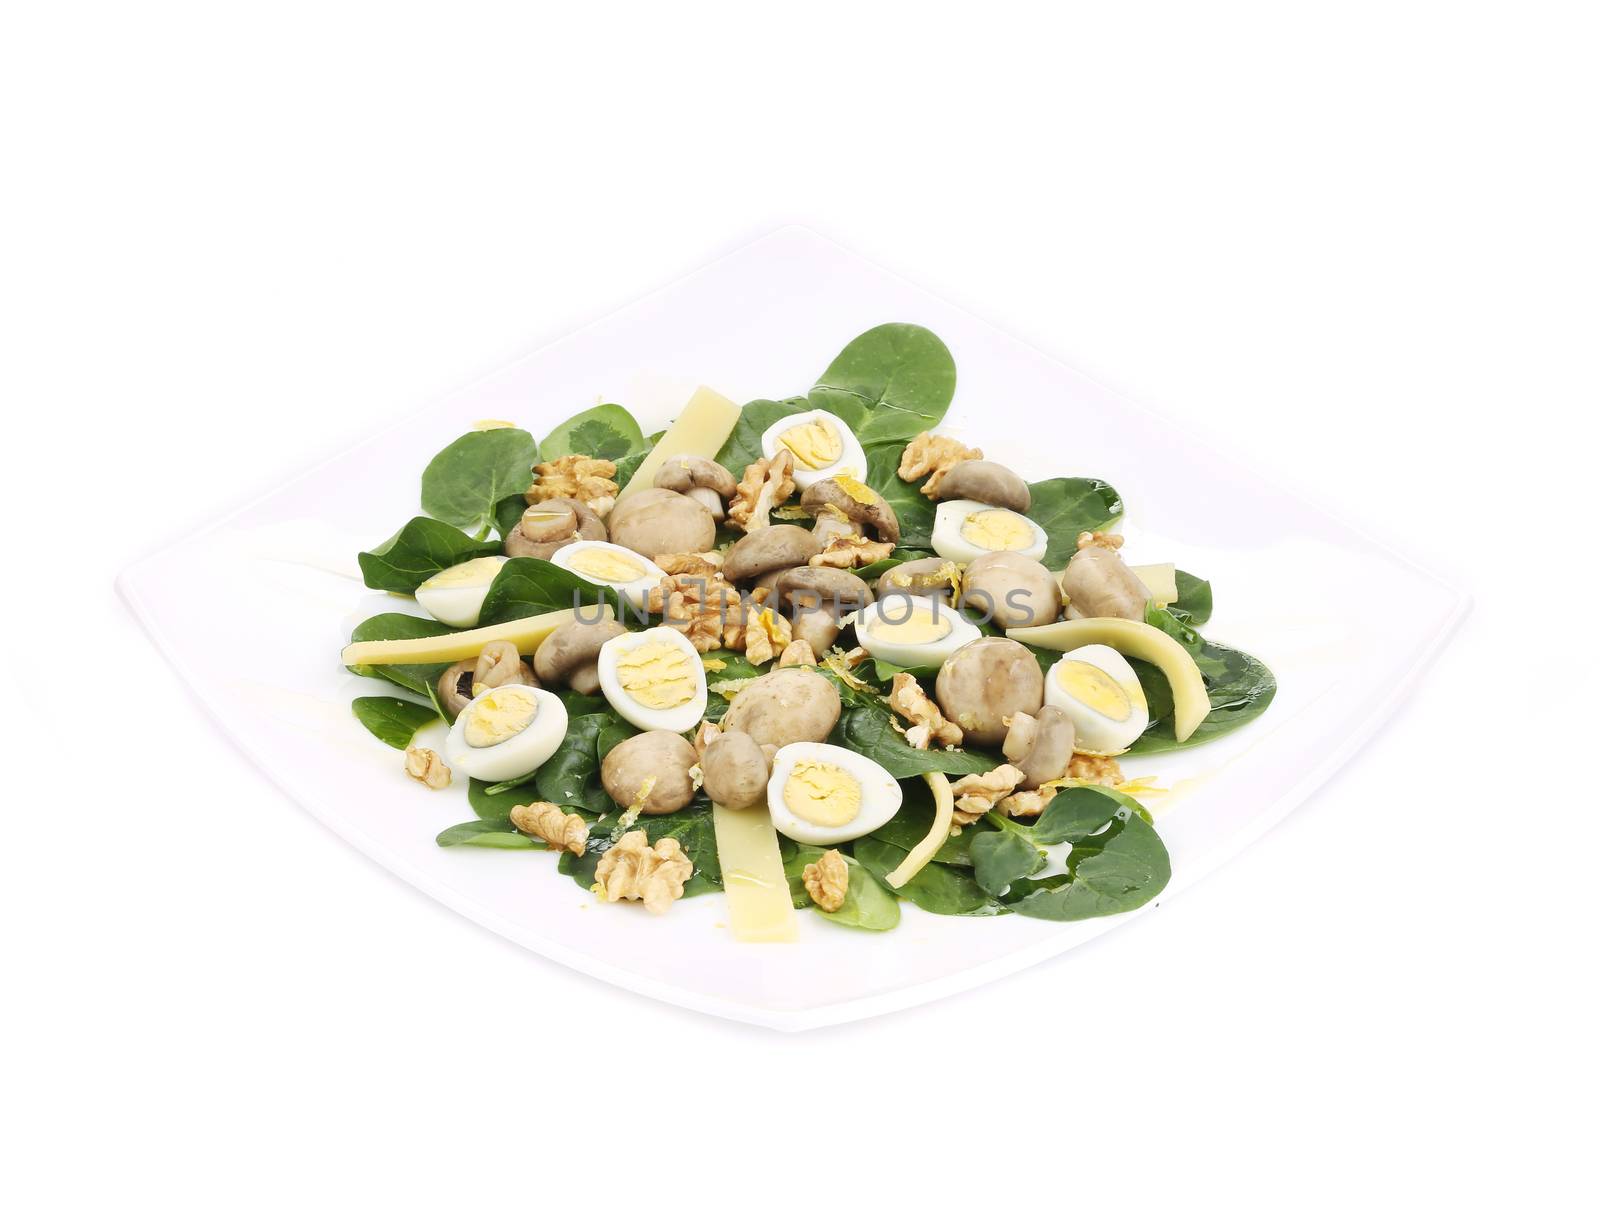 Mushroom salad with walnuts and parmesan. by indigolotos